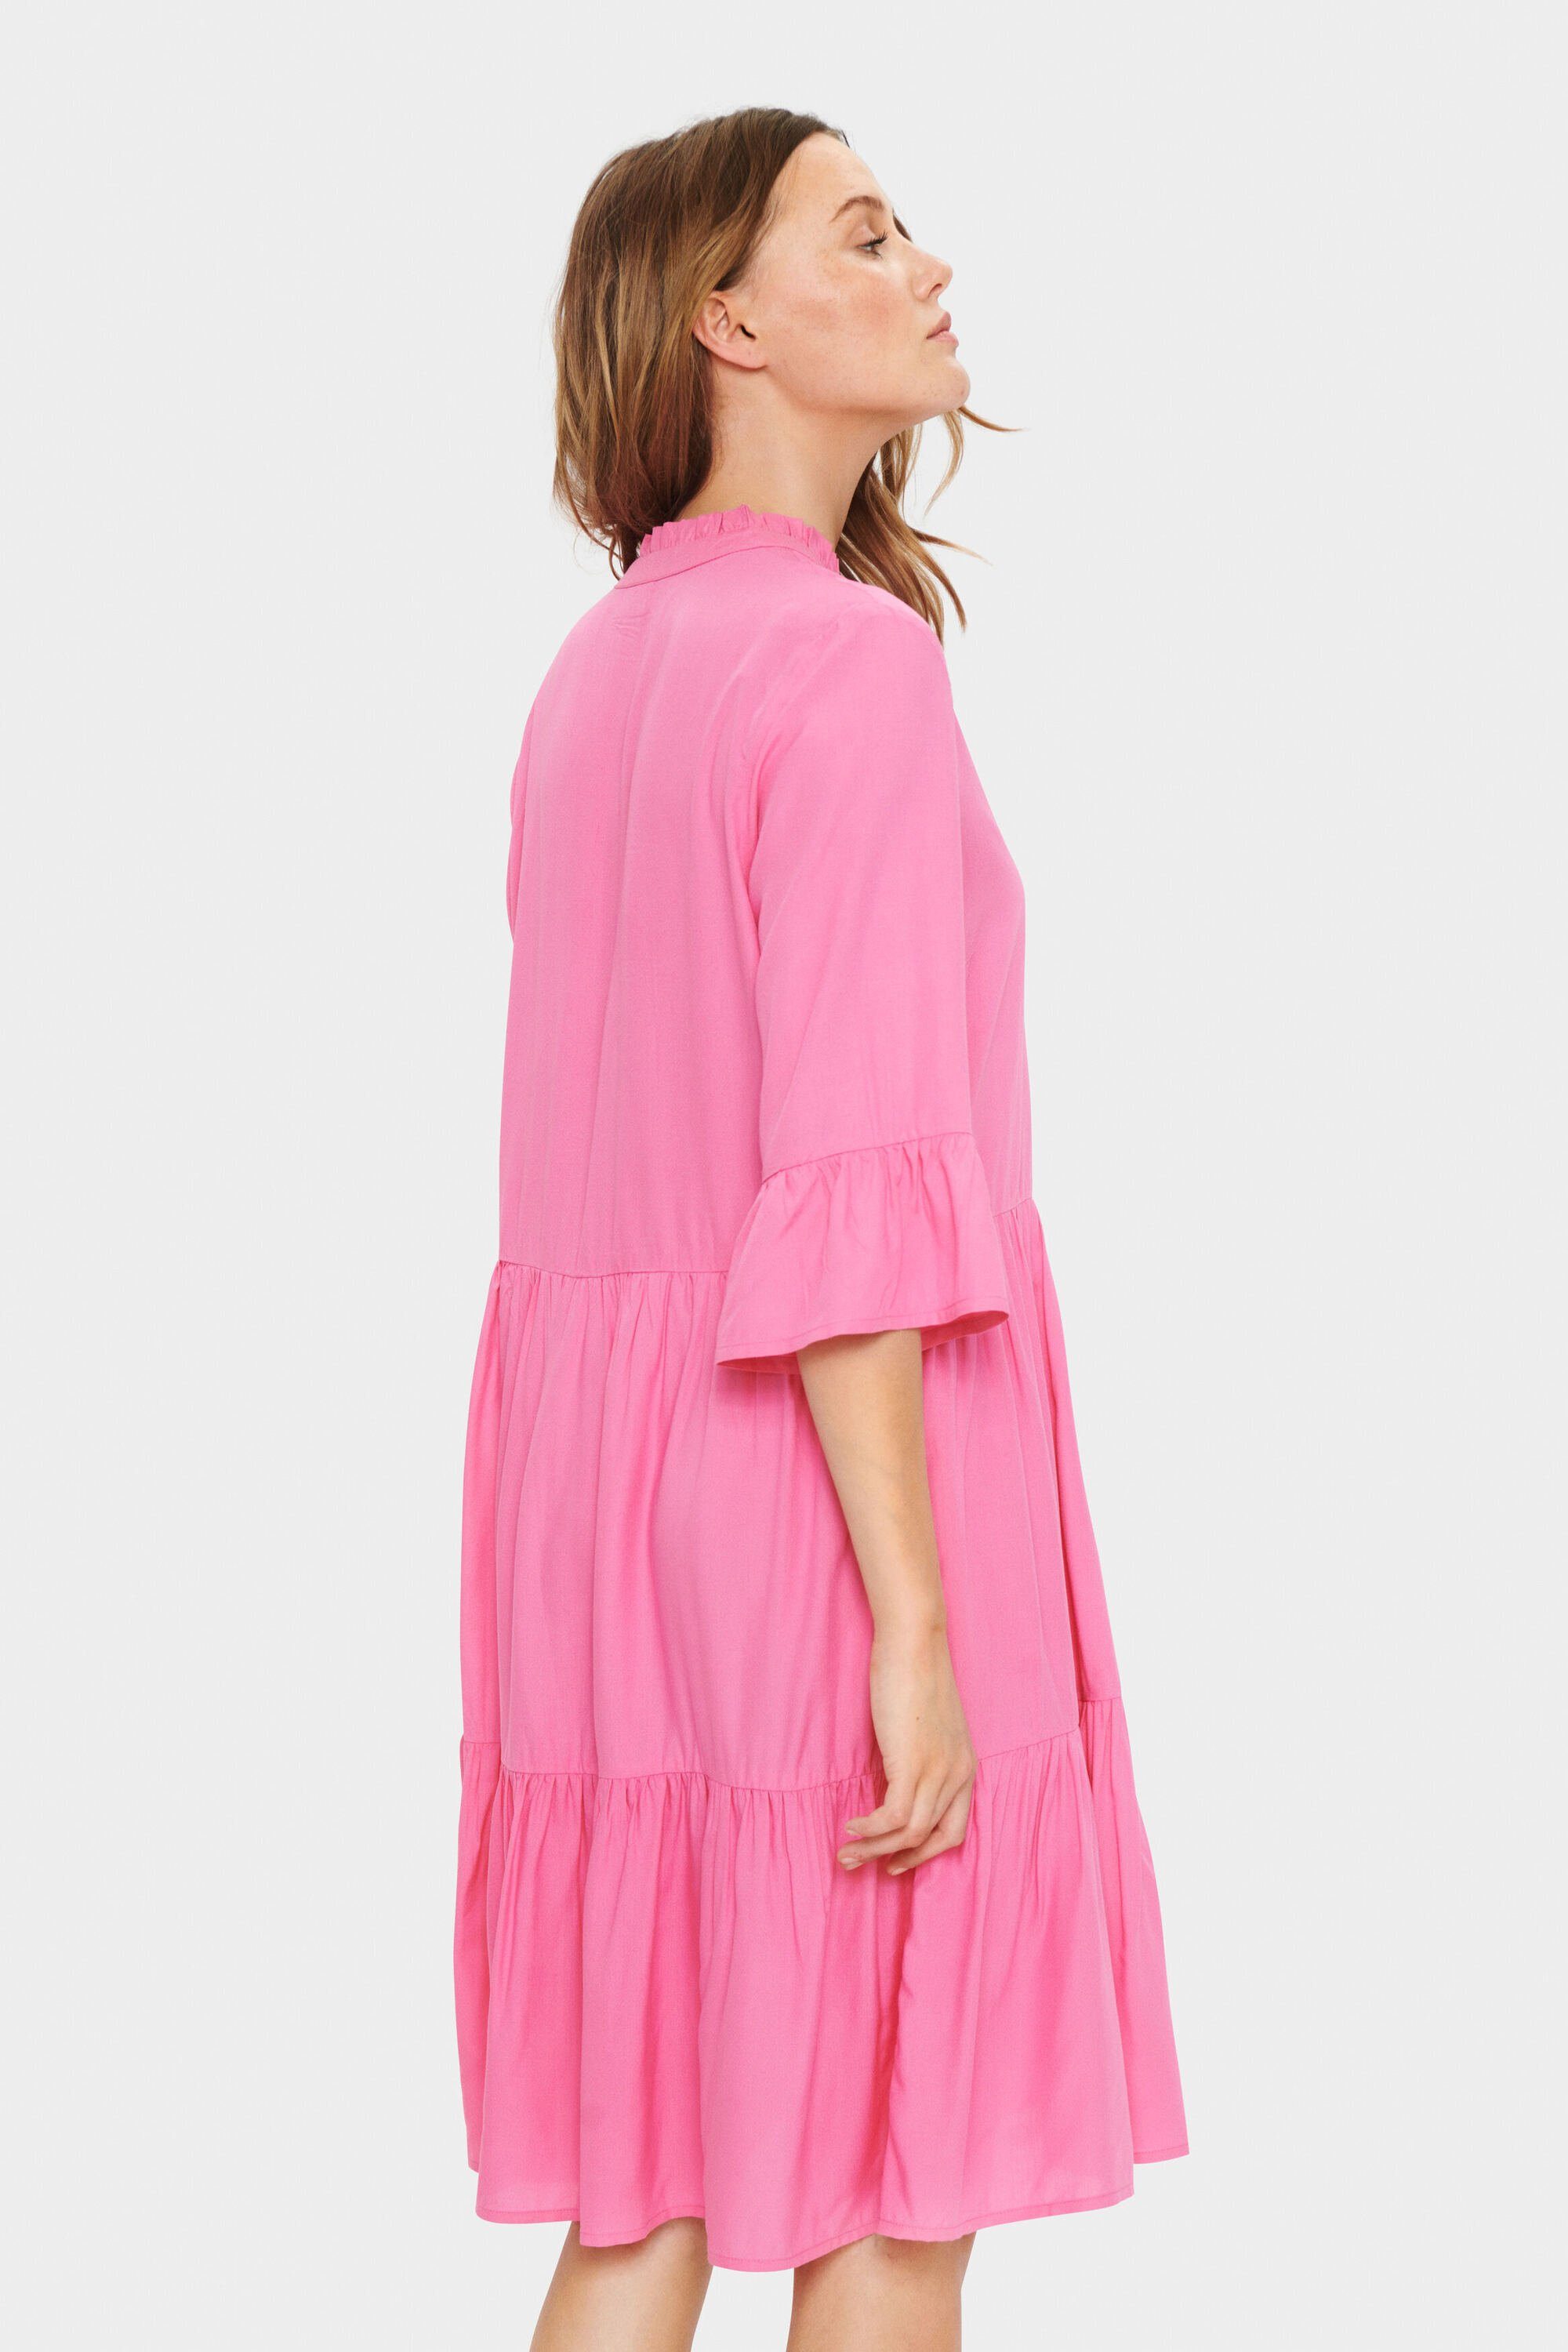 Saint Tropez Kleid Pink Azalea EdaSZ Jerseykleid